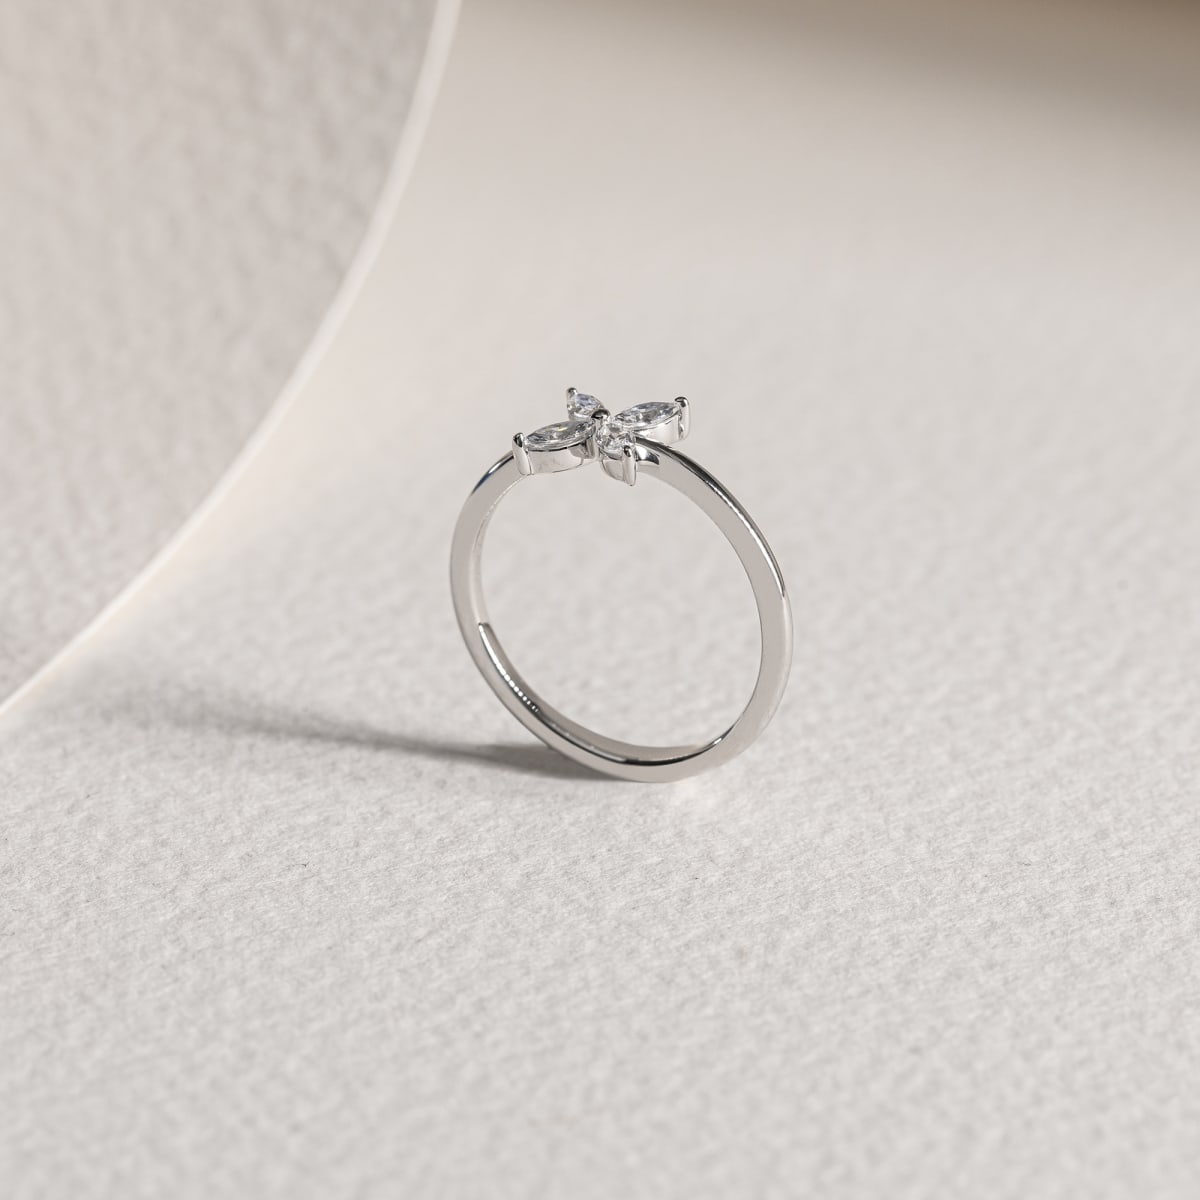 Primrose Ring, Ring Size 6, Sterling Silver, Nexus Diamond Alternative